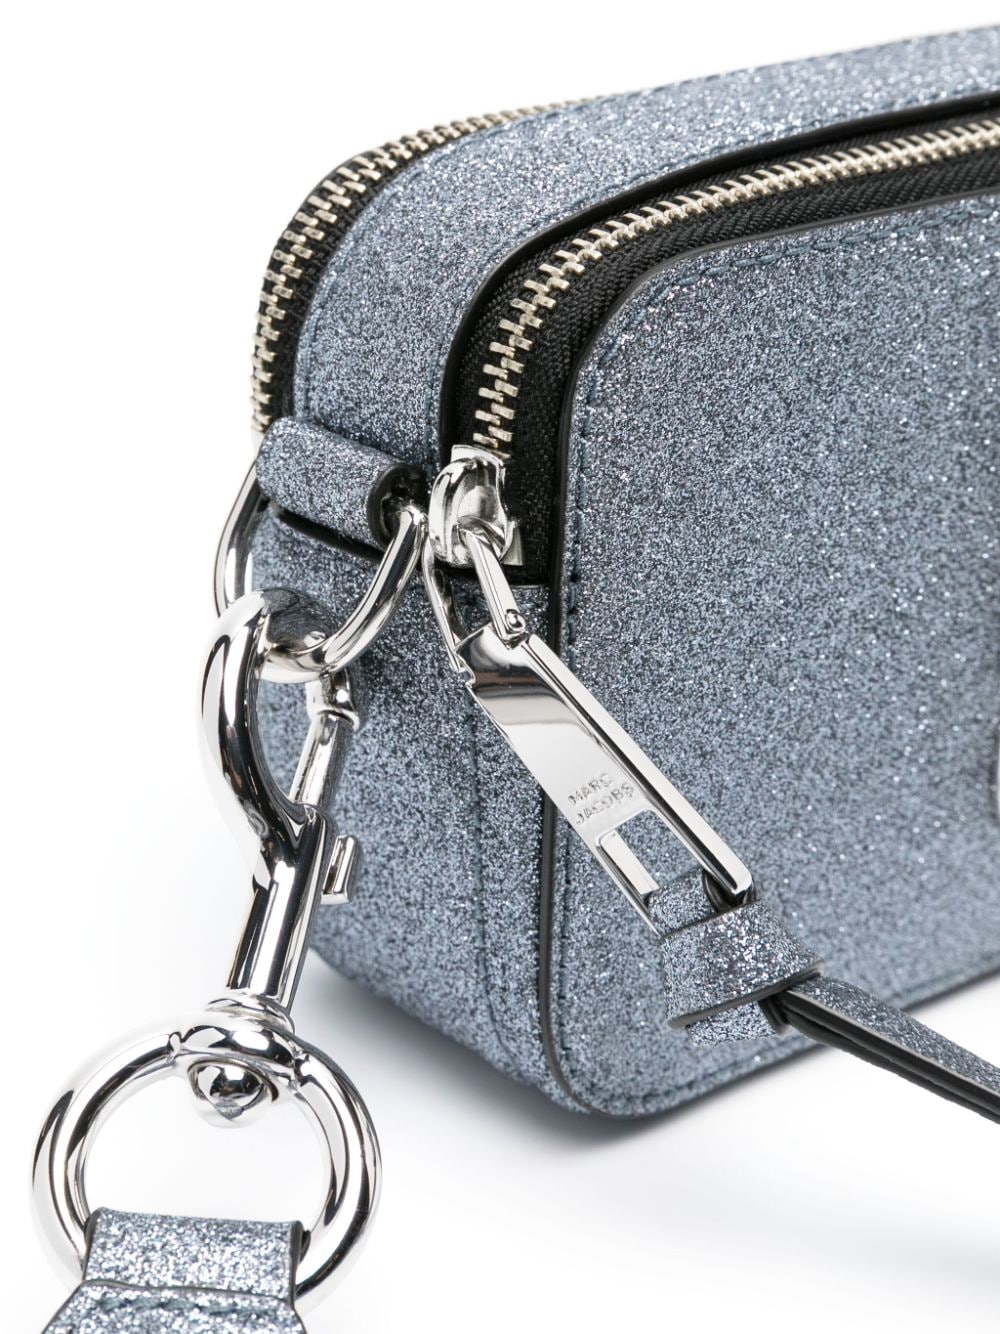 Metallic Snapshot shoulder bag with glitter